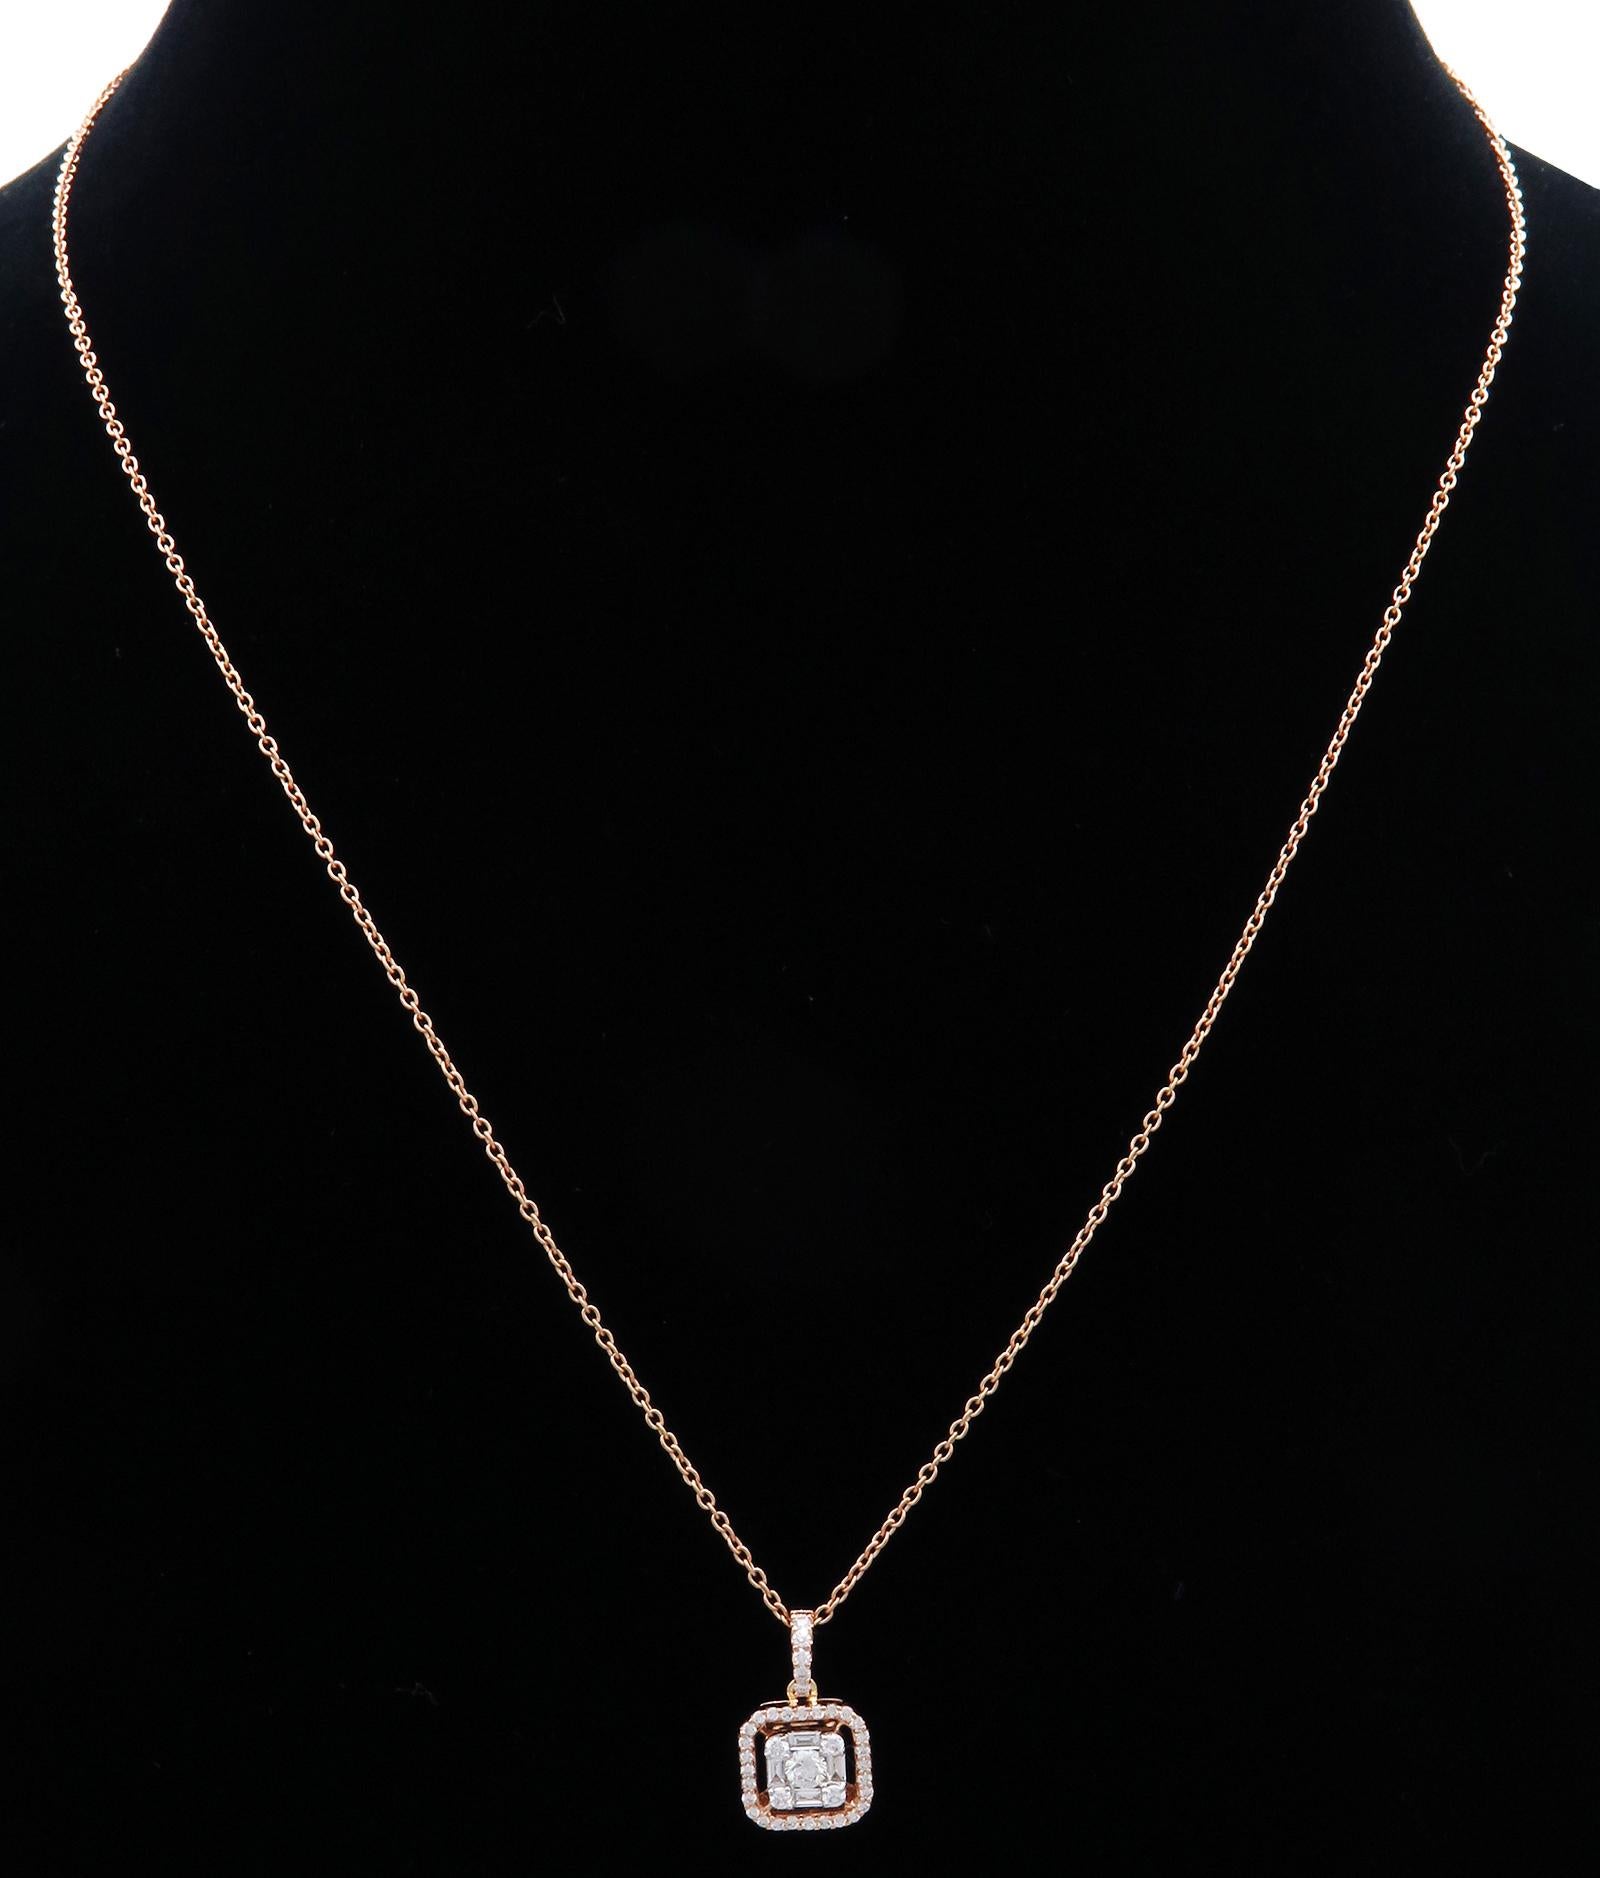 Baguette Cut Classic Diamond Chain Necklace in 18 Karat White Gold